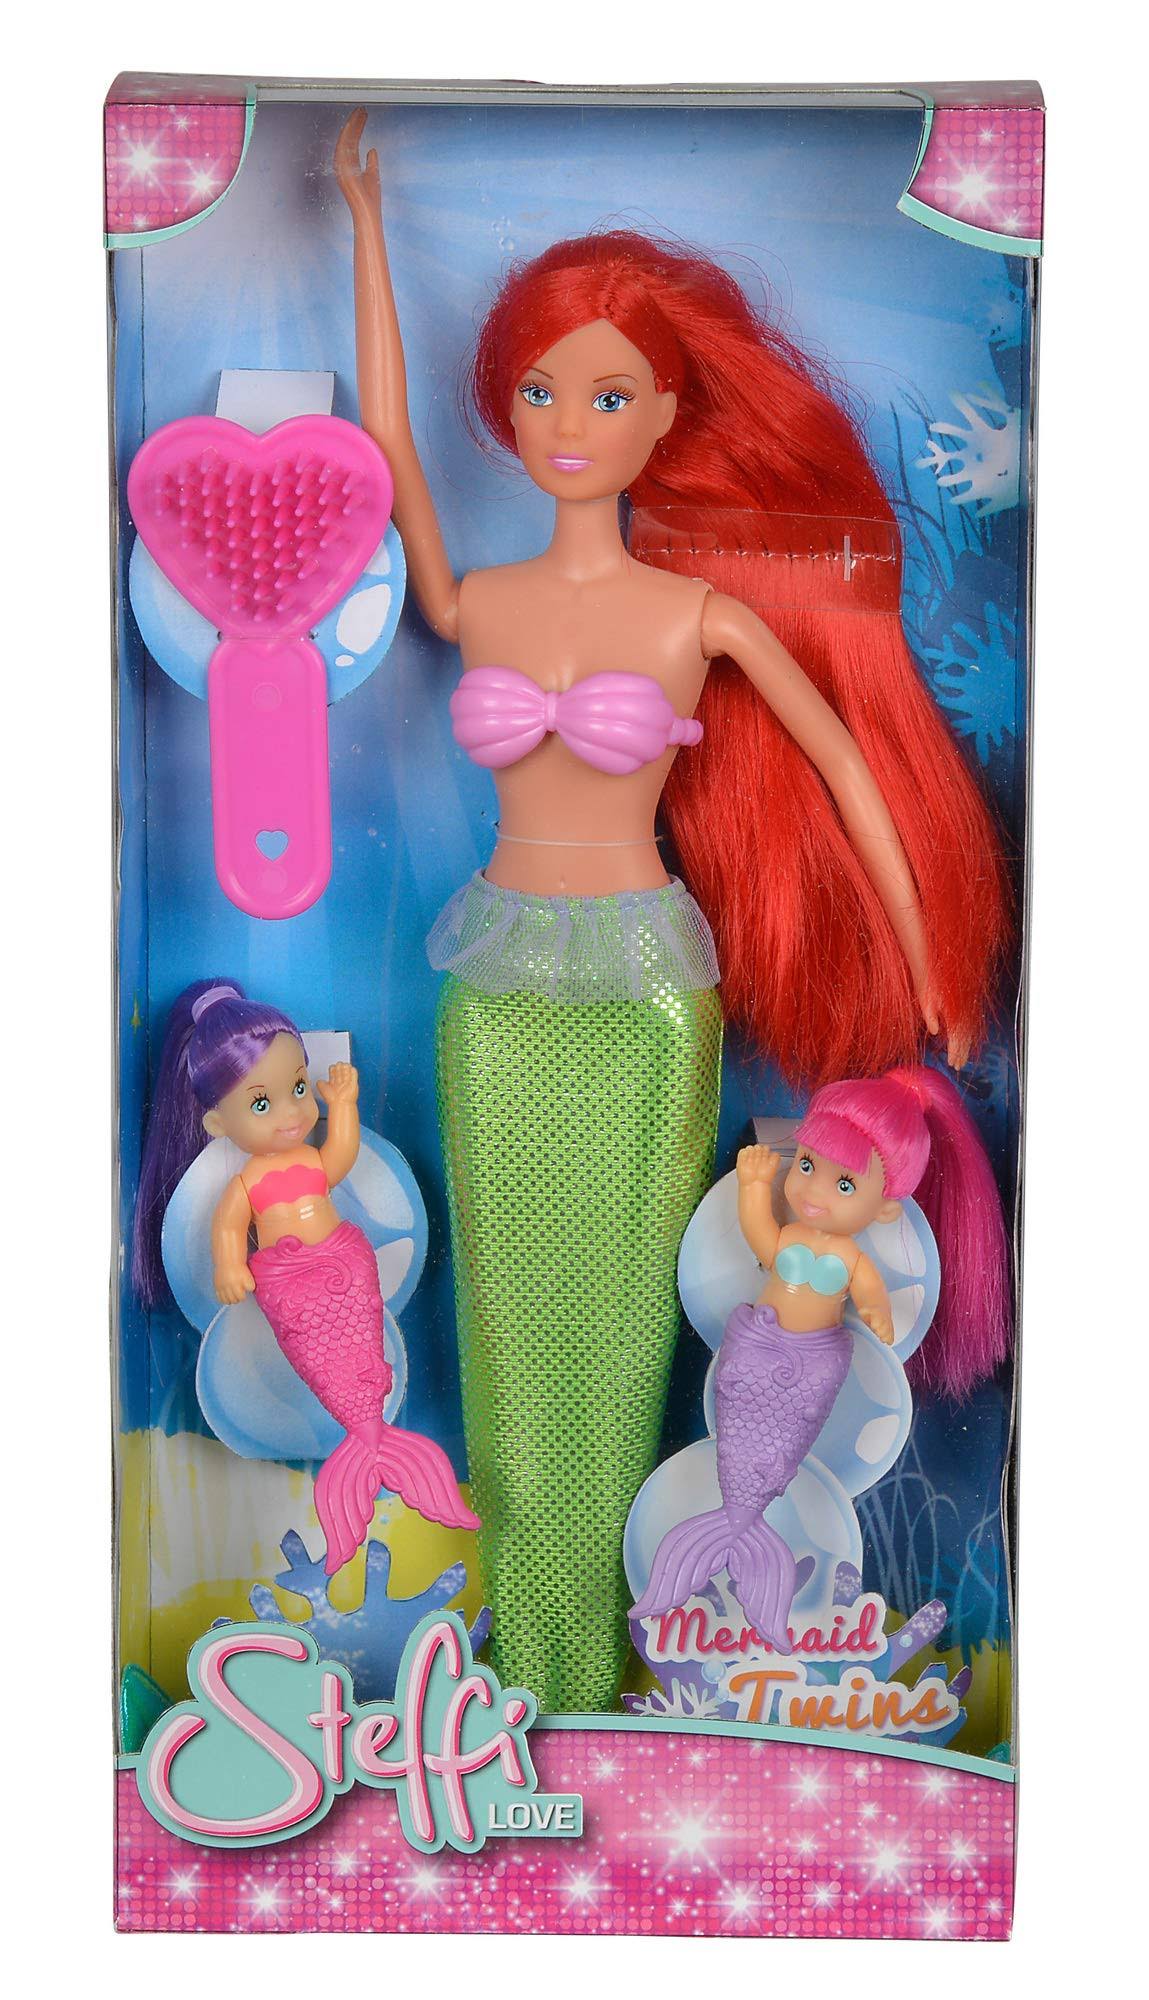 Simba Steffi Love Pixie Lott Magical Mermaid Fashion Dolls 